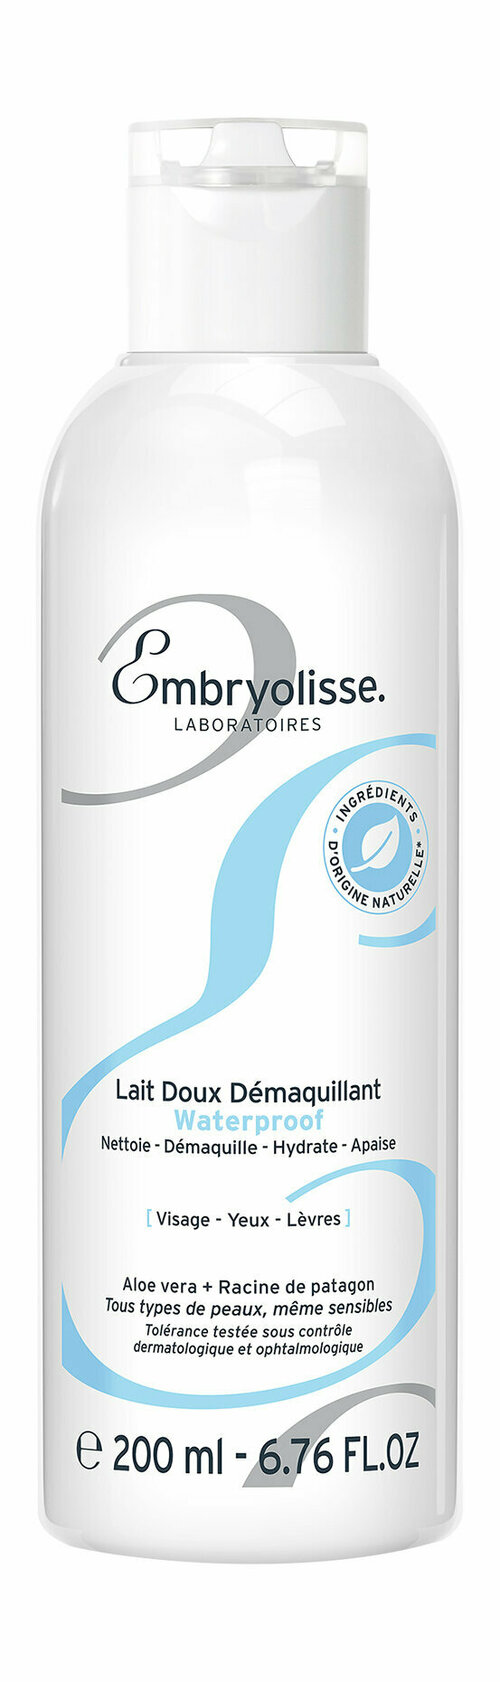 Молочко для снятия макияжа Embryolisse Lait Doux Demaquillant Waterproof